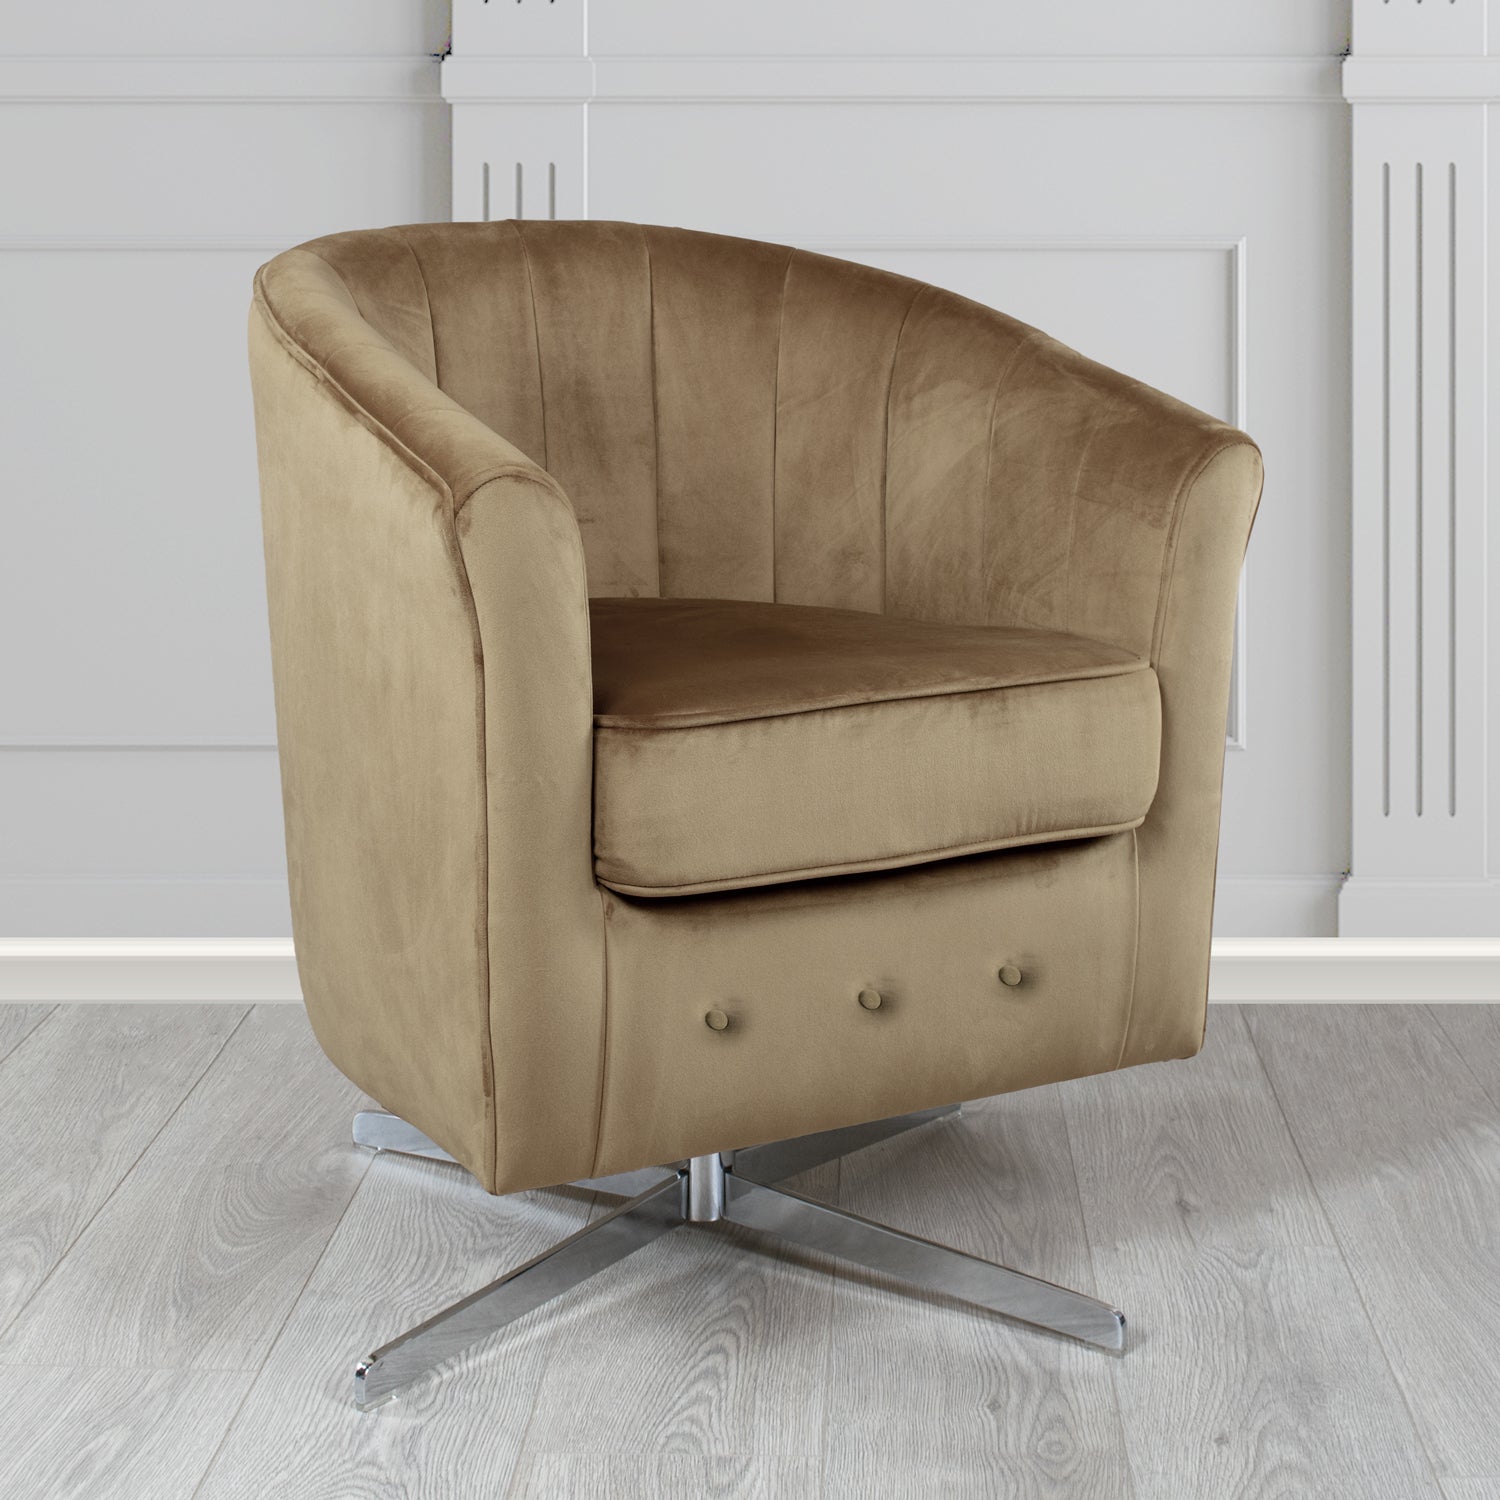 Doha Monaco Biscuit Plain Velvet Fabric Swivel Tub Chair - The Tub Chair Shop